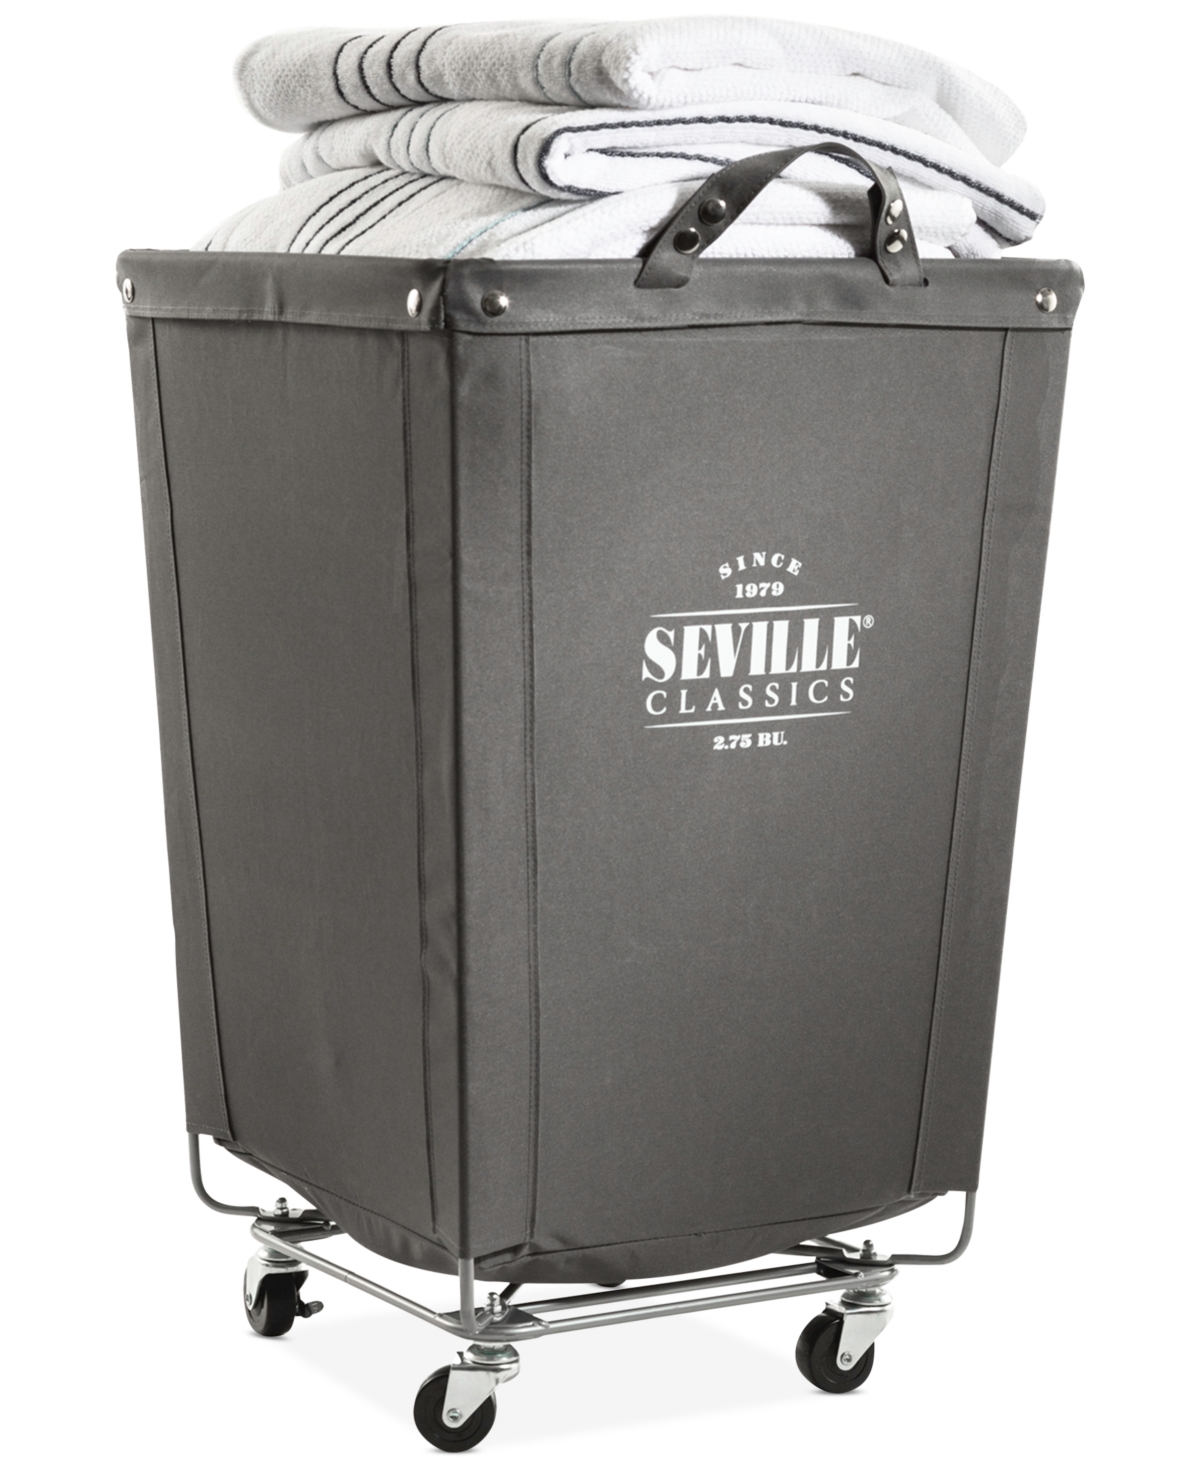 Commercial Heavy-Duty Canvas Laundry Basket Hamper with Wheels - Slate Gray